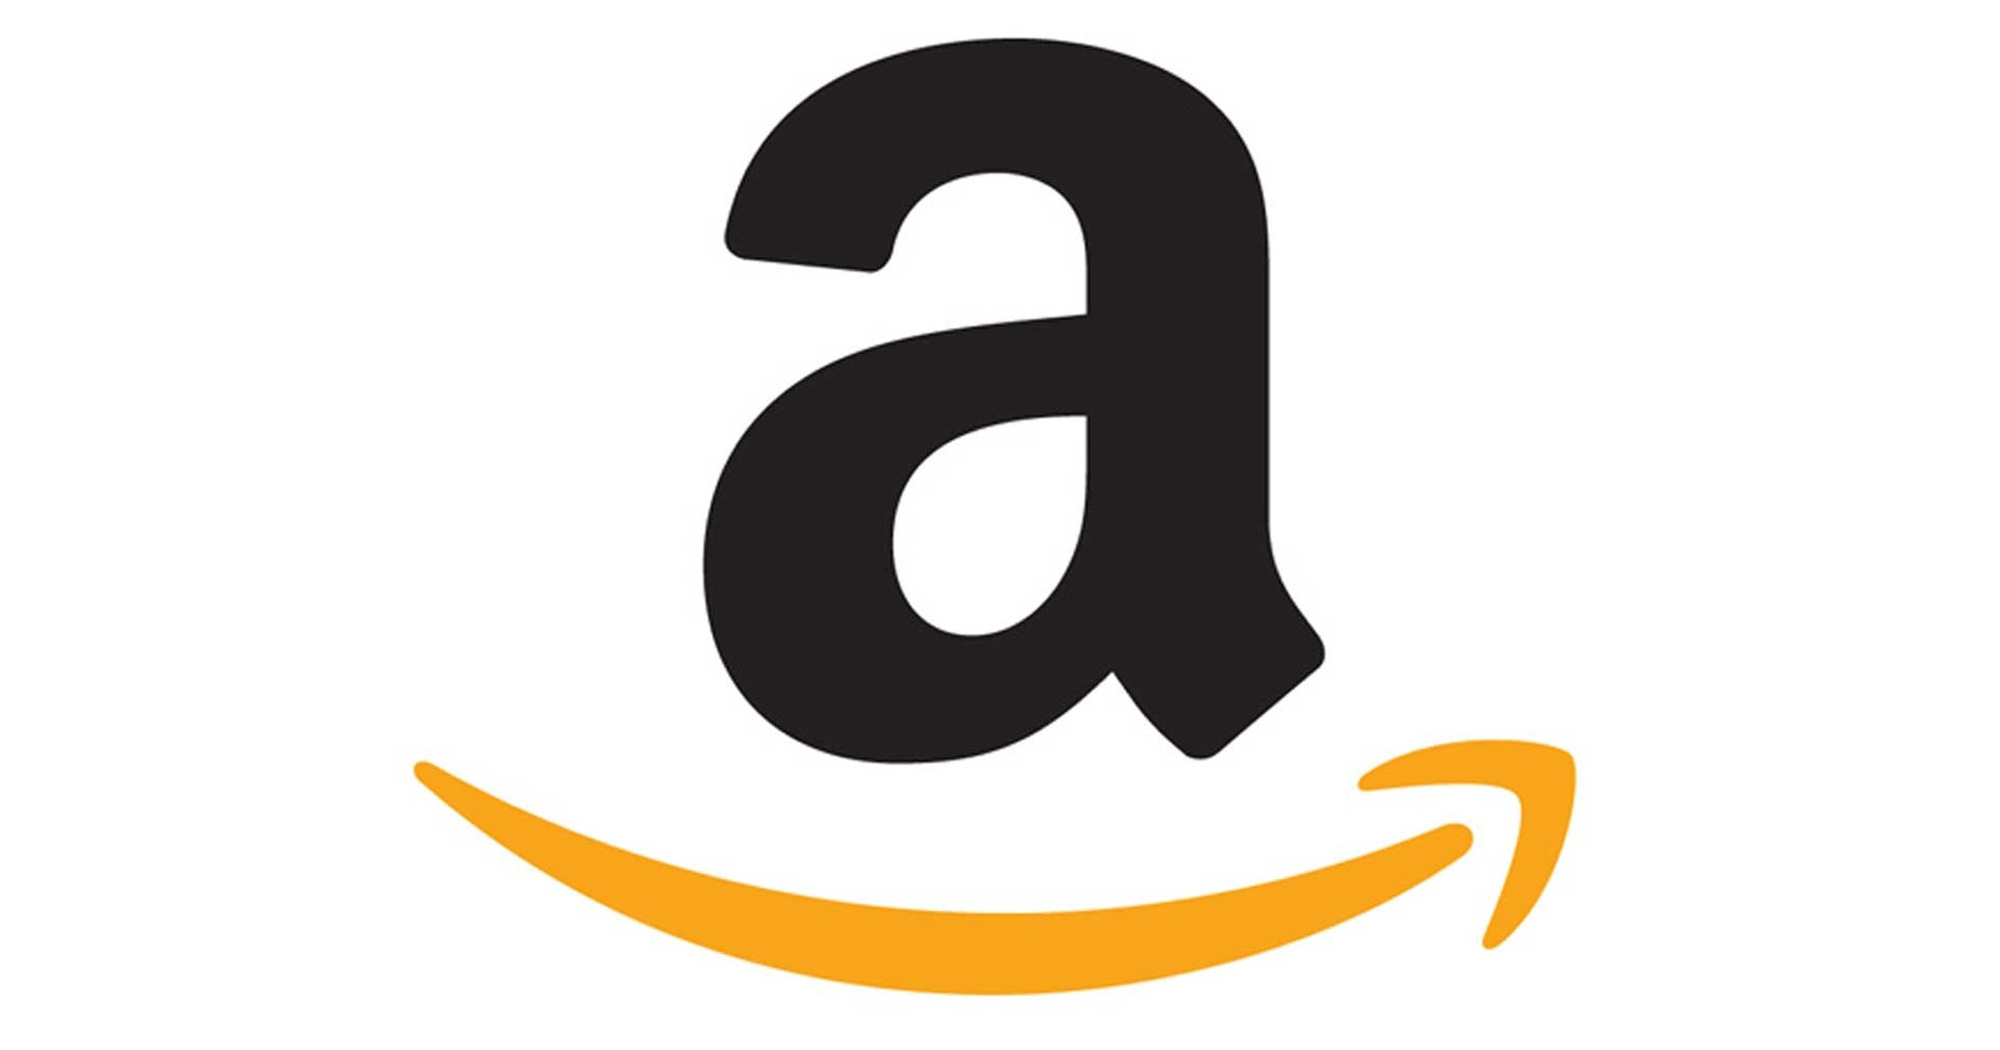 Small Amazon Logo - Amazon com Logos